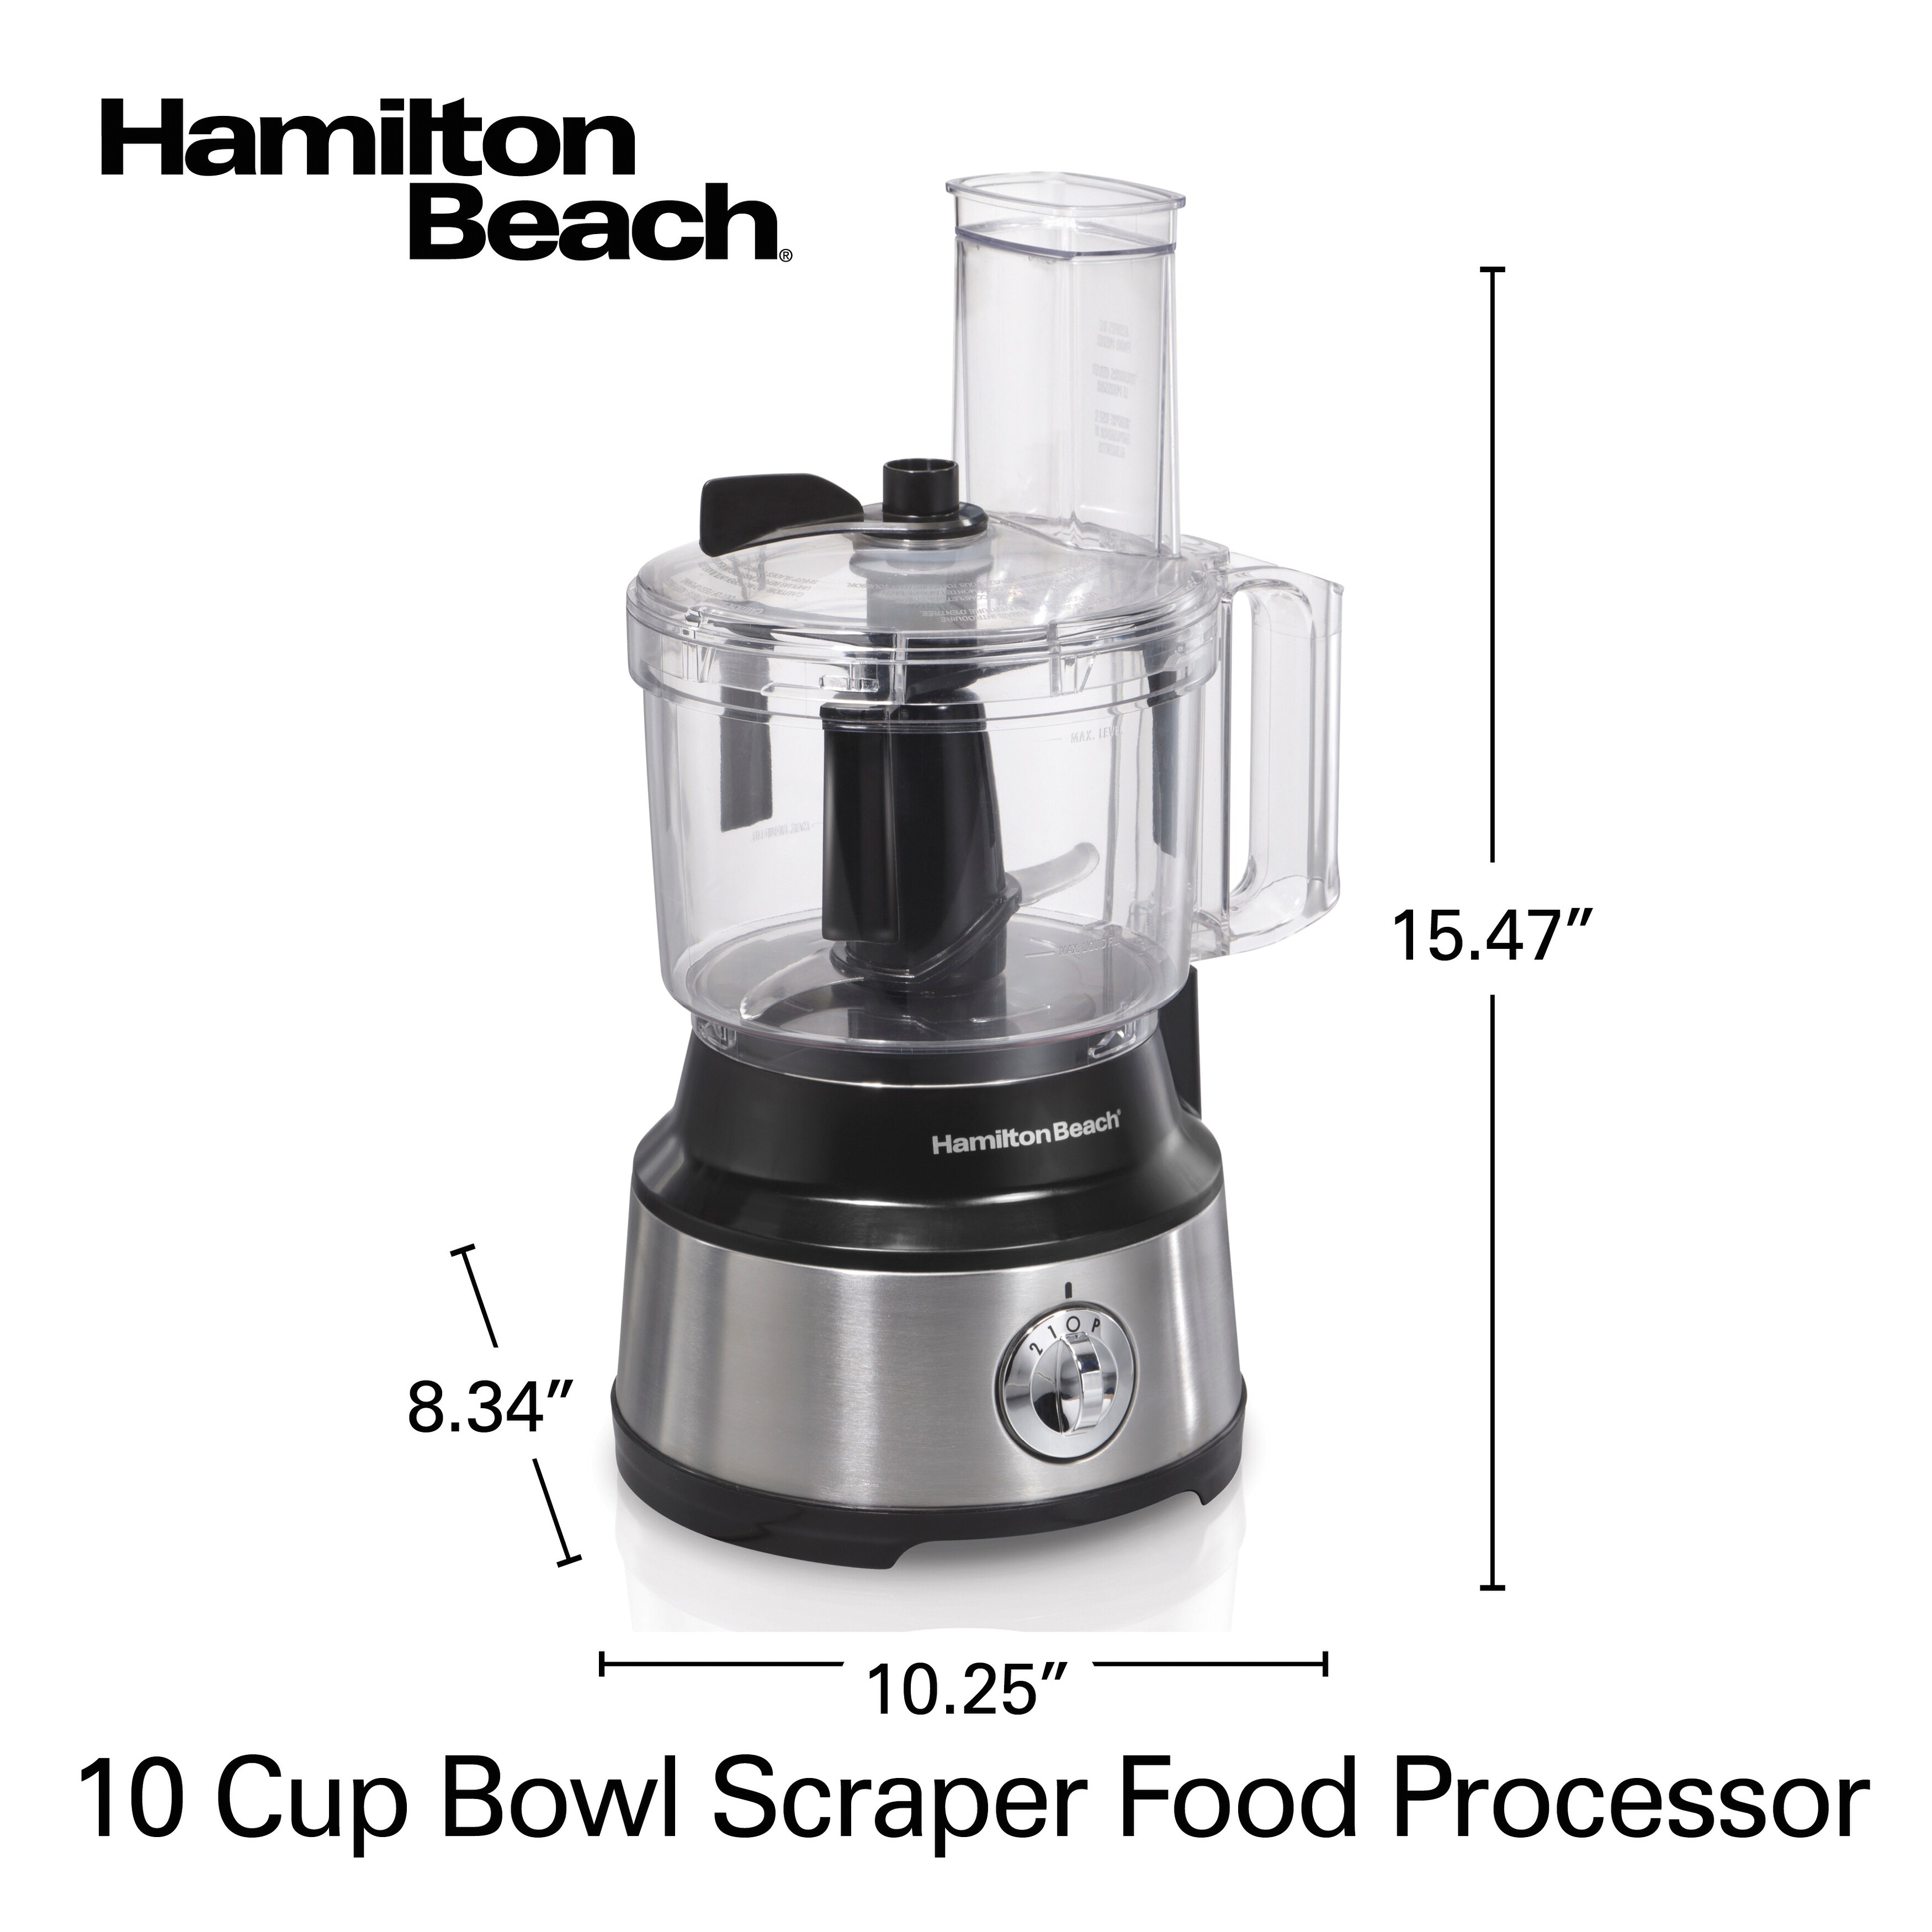 Hamilton Beach 10 Cup Bowl Scraper Food Processor Bed Bath  Beyond  7508182